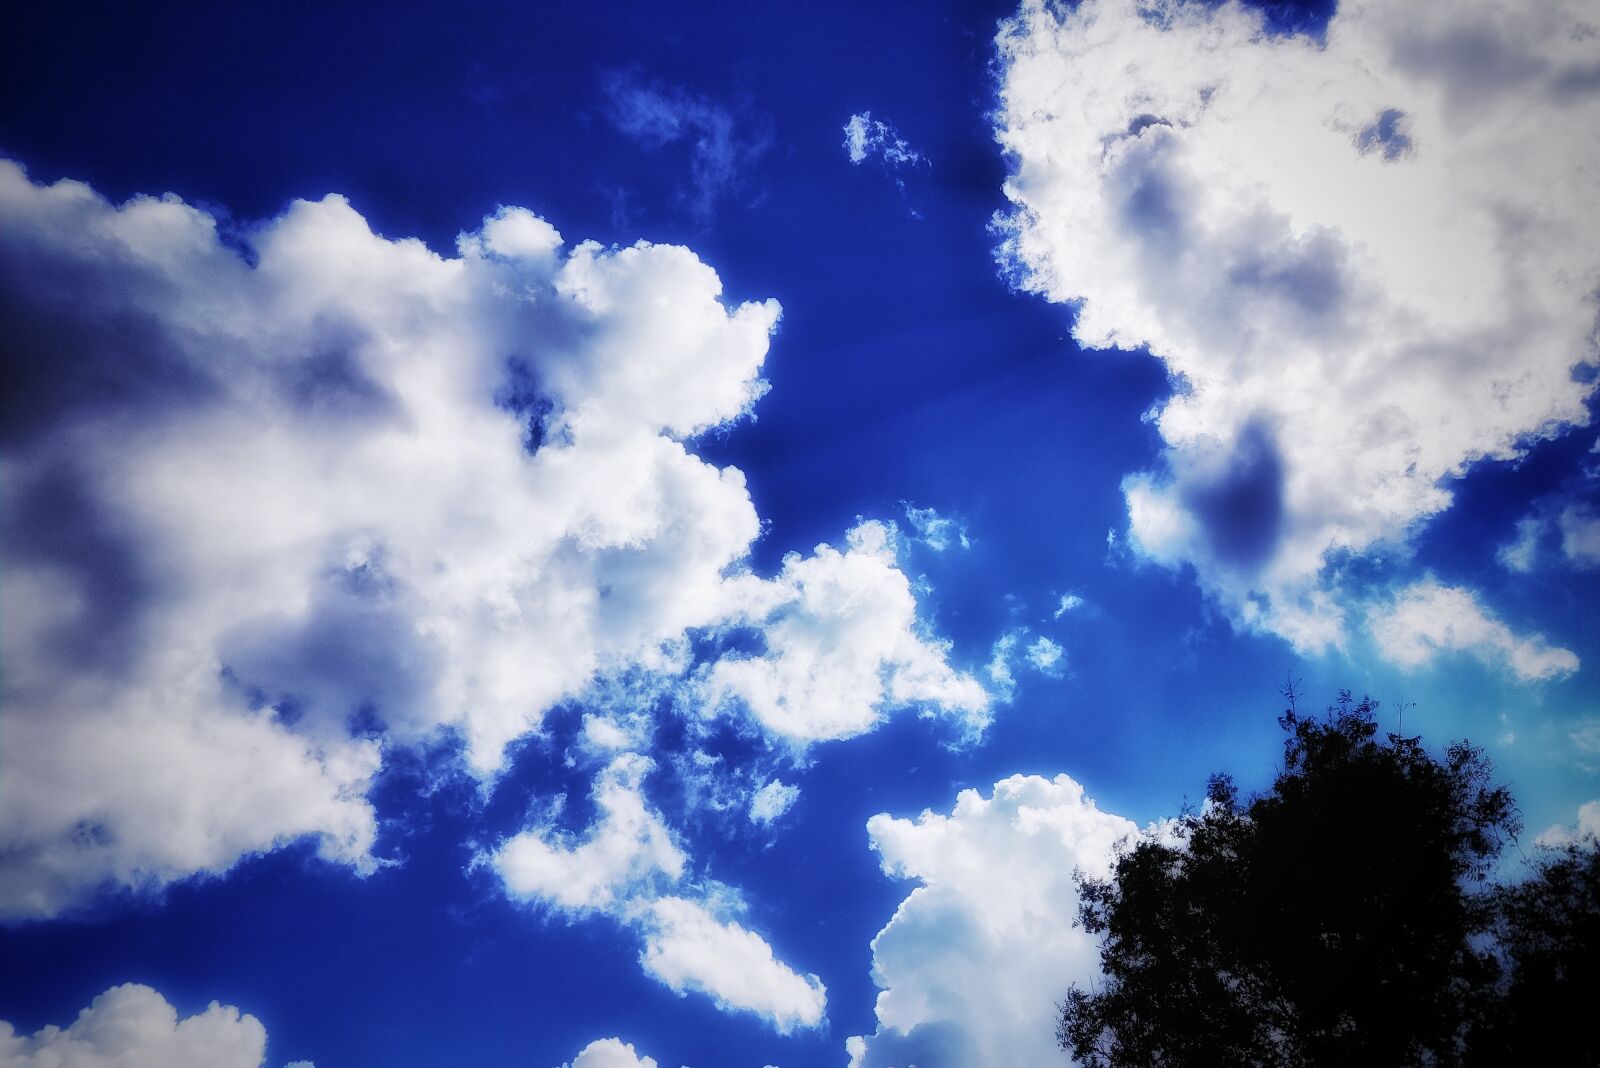 OnePlus AC2001 sample photo. Nature, sky, beautiful photography